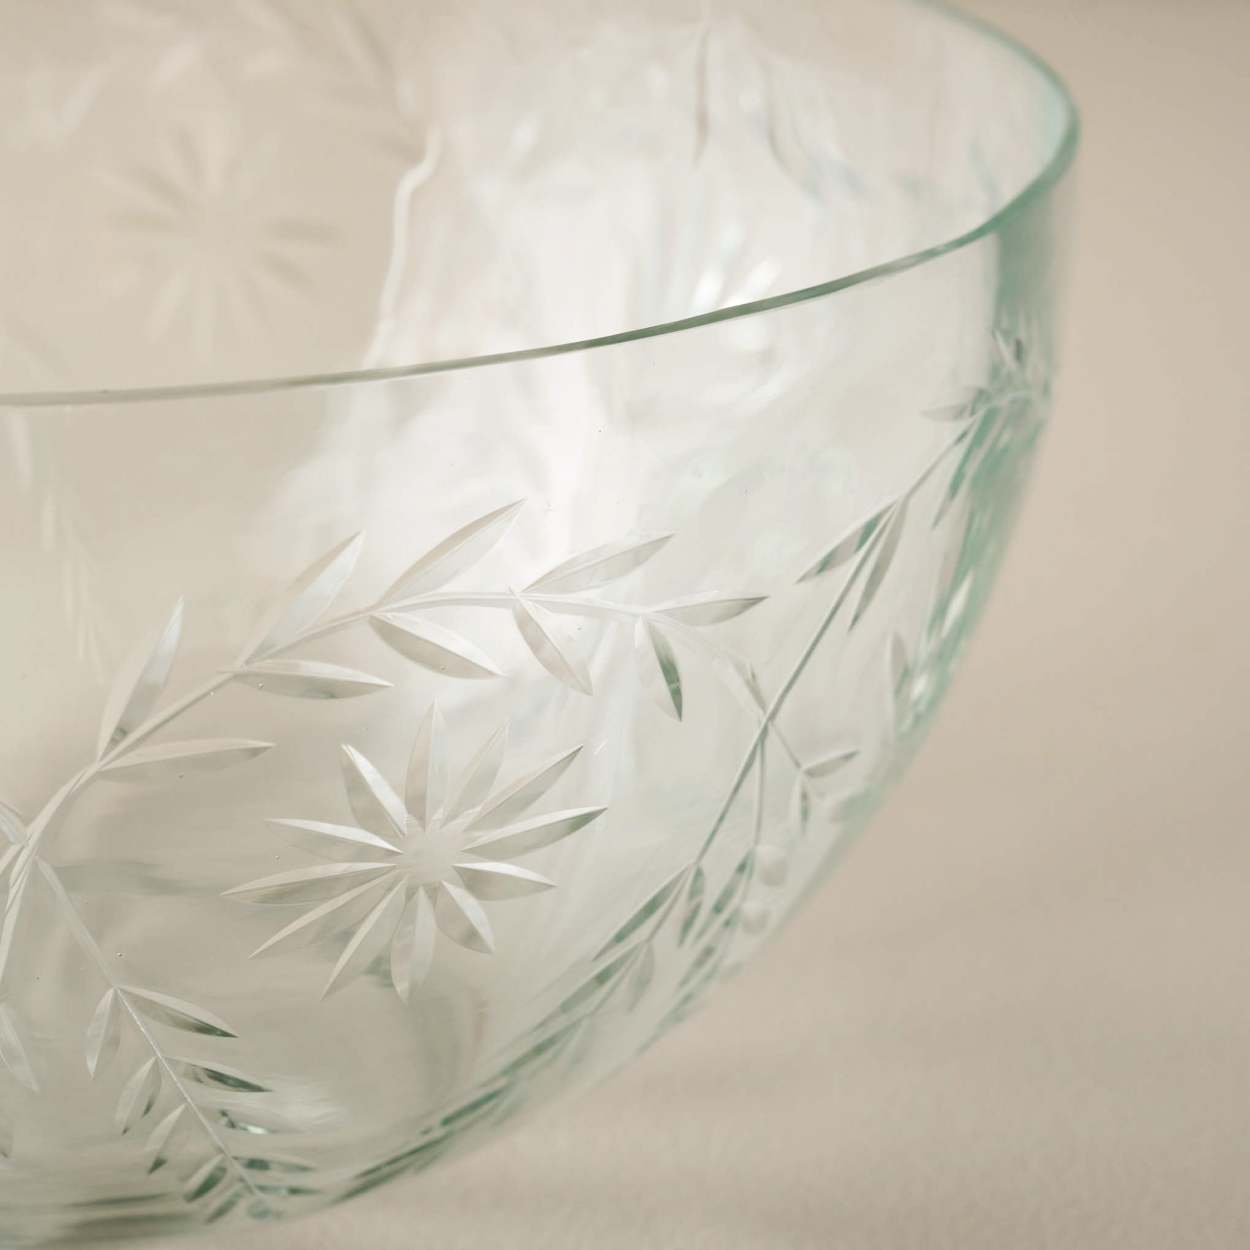 Glass Mixing Bowl - Magnolia